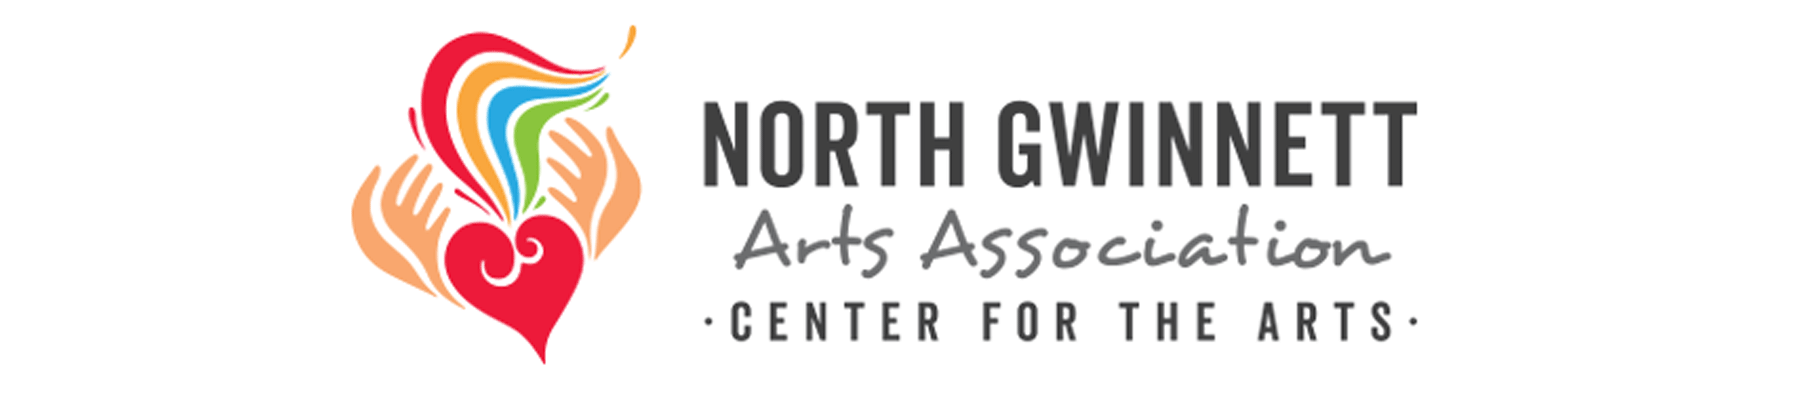 North Gwinnett Arts Association Center for the Arts